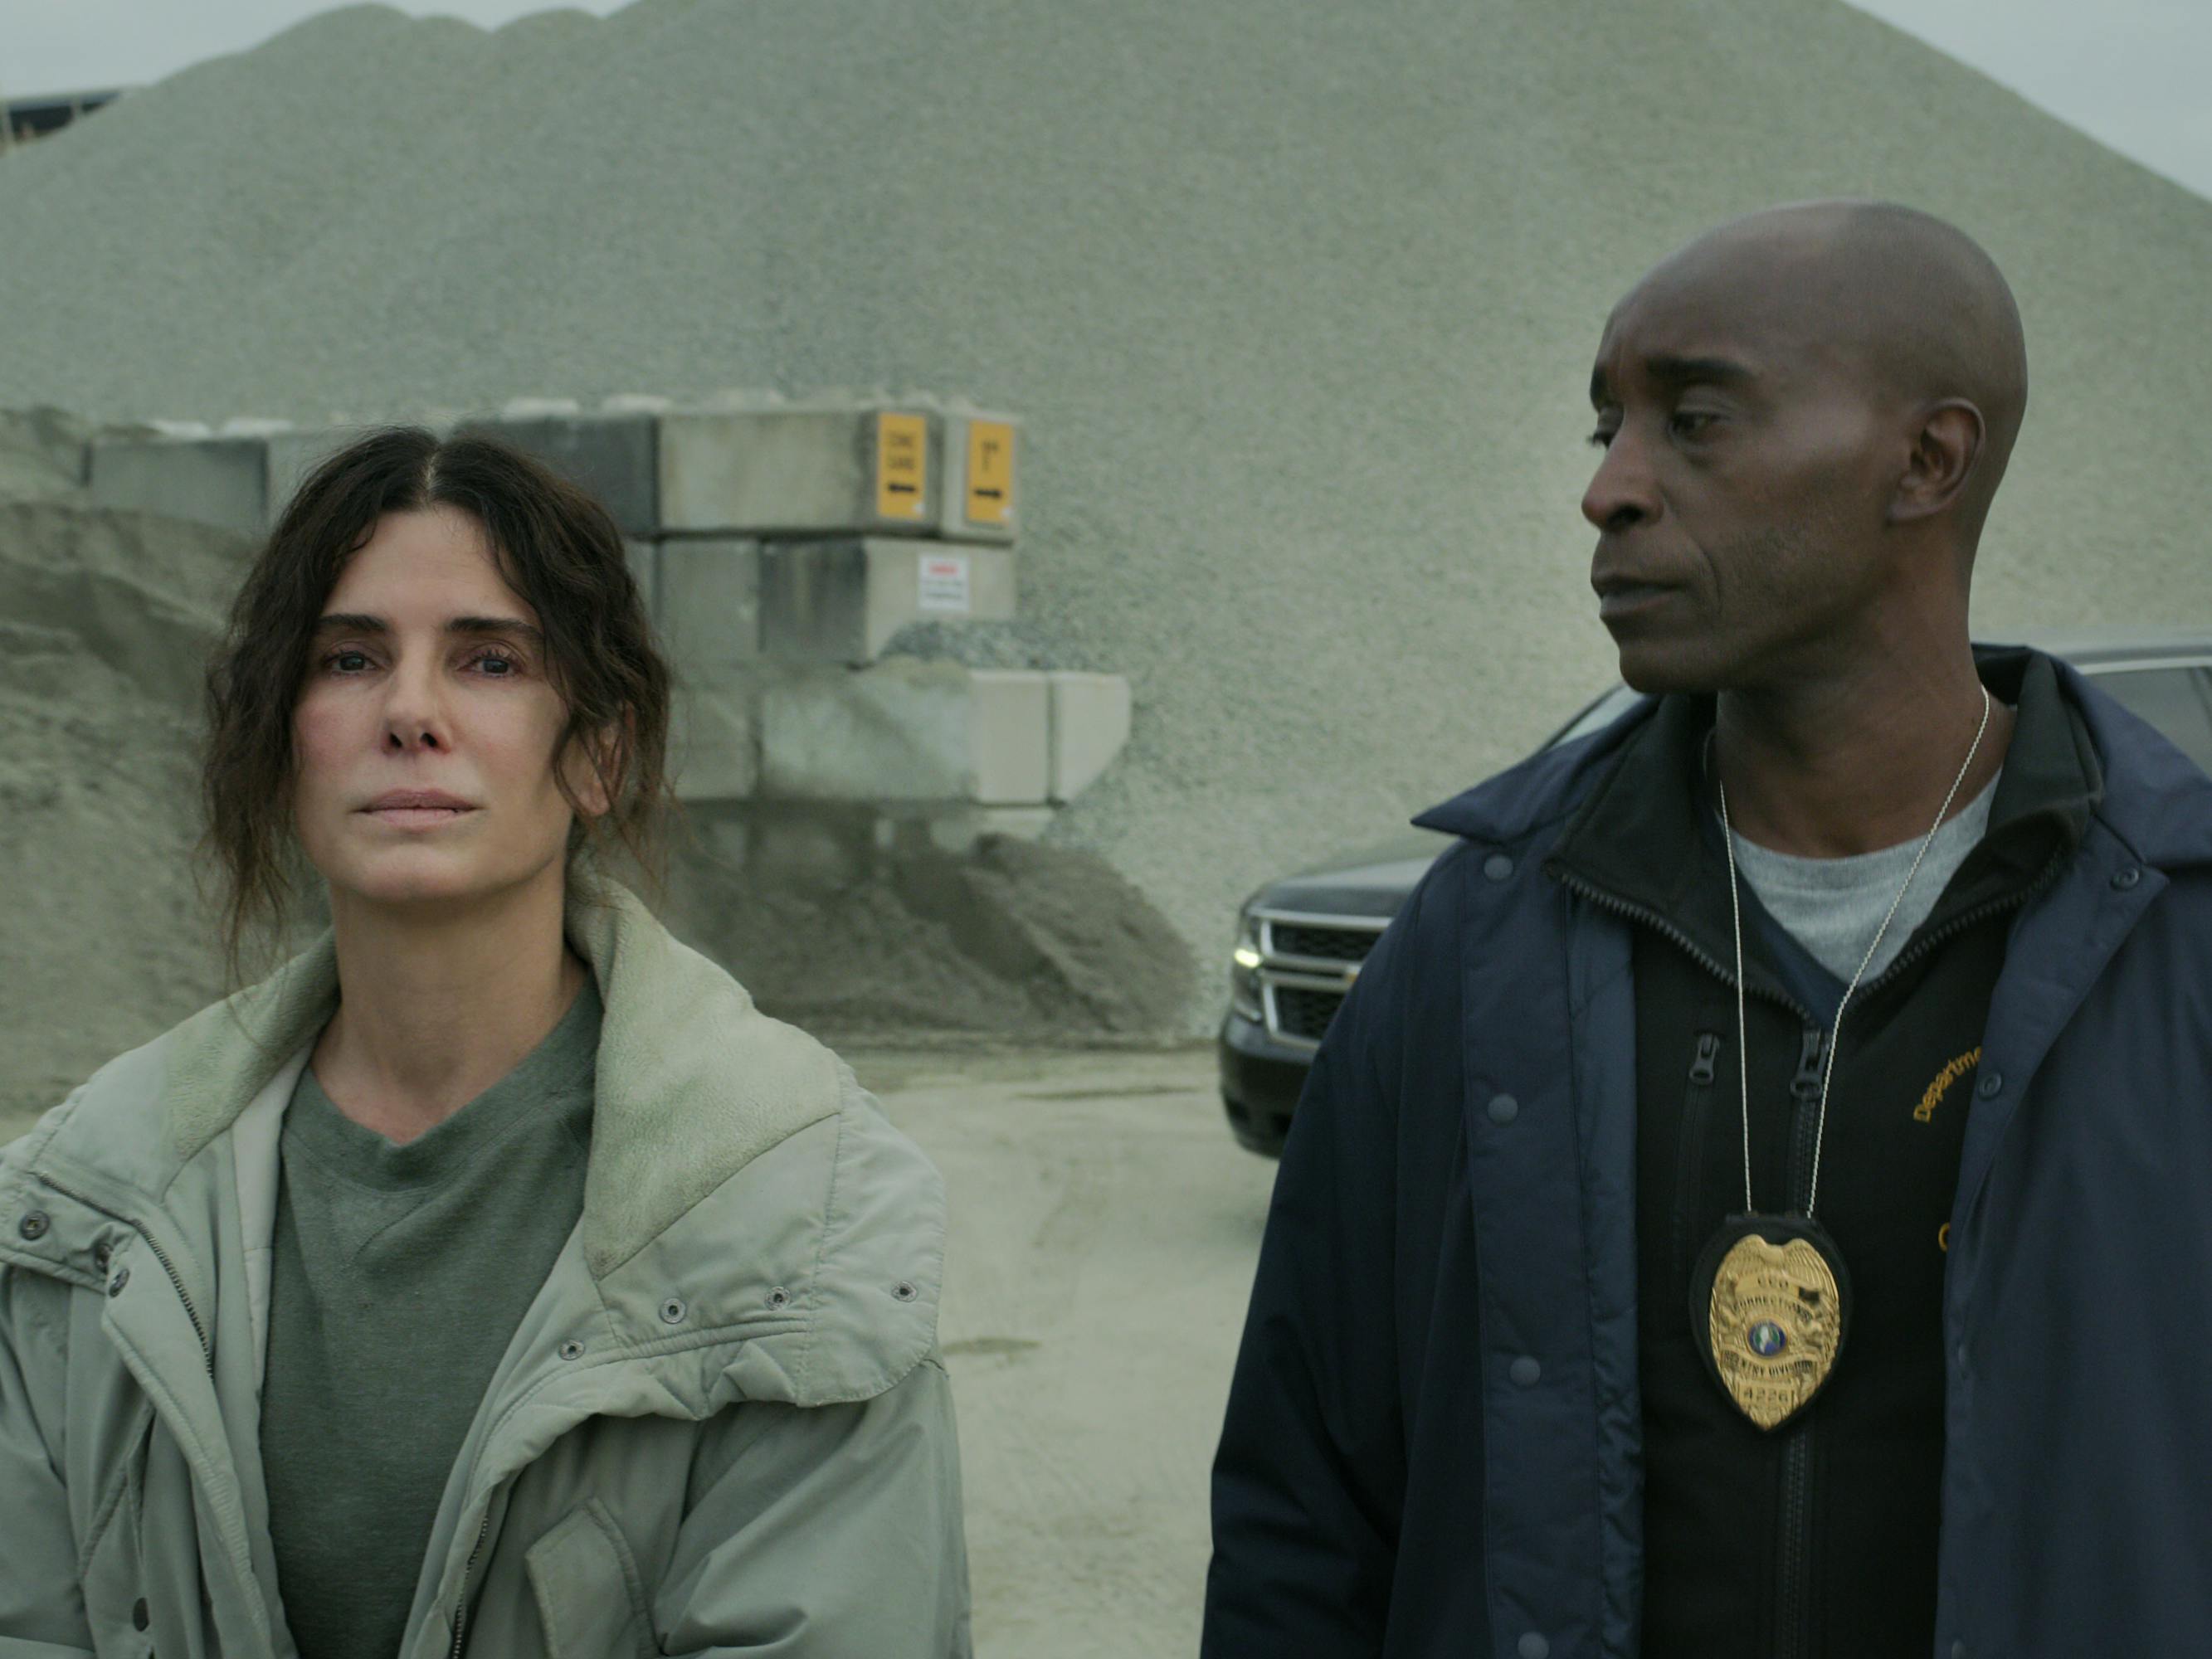 Sandra Bullock and Rob Morgan walk through a dusty lot. Bullock wears a light grey jacket, and Morgan wears a police badge over a dark jacket.